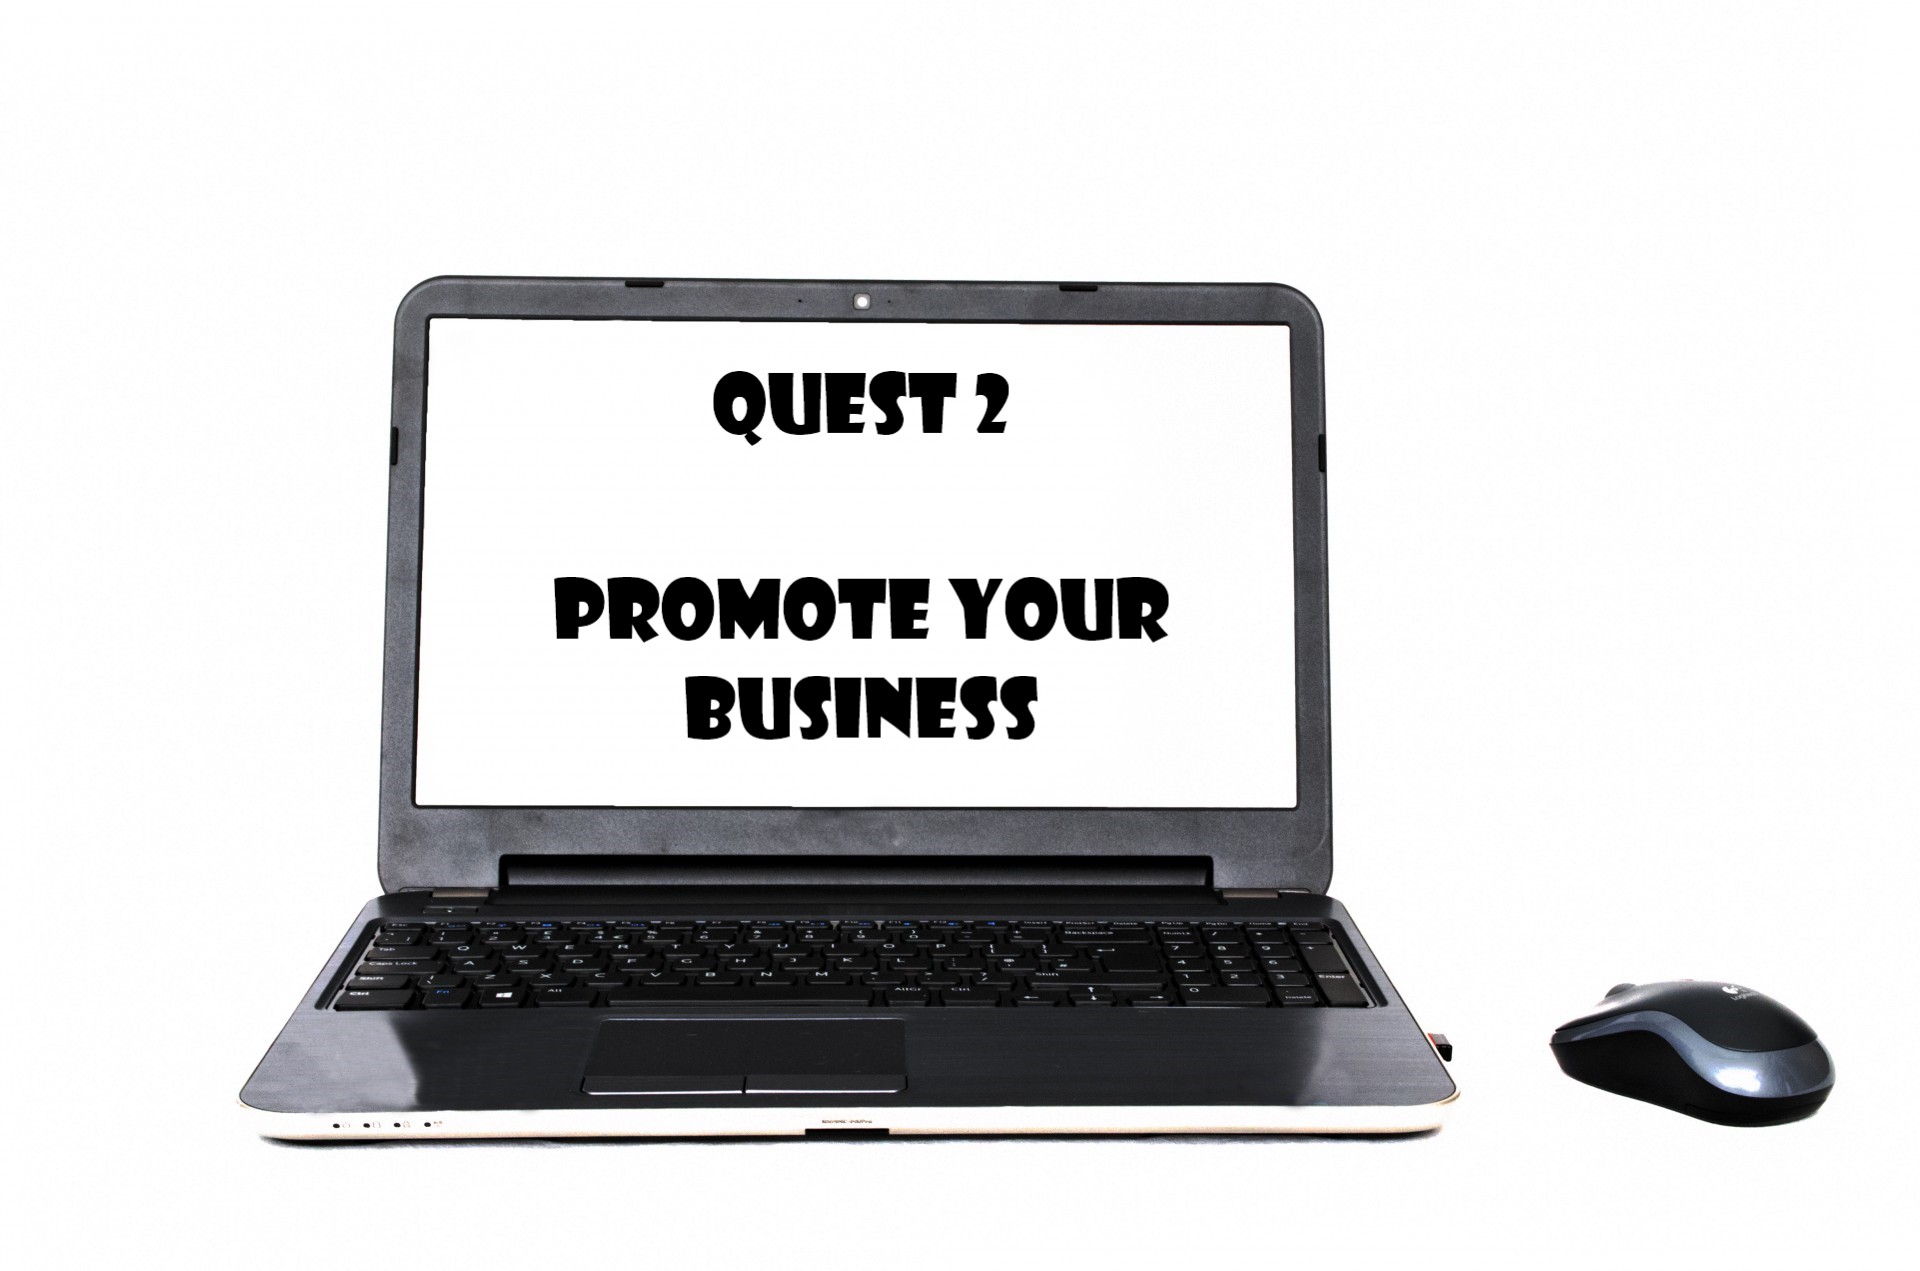 Improve Your Business Quest